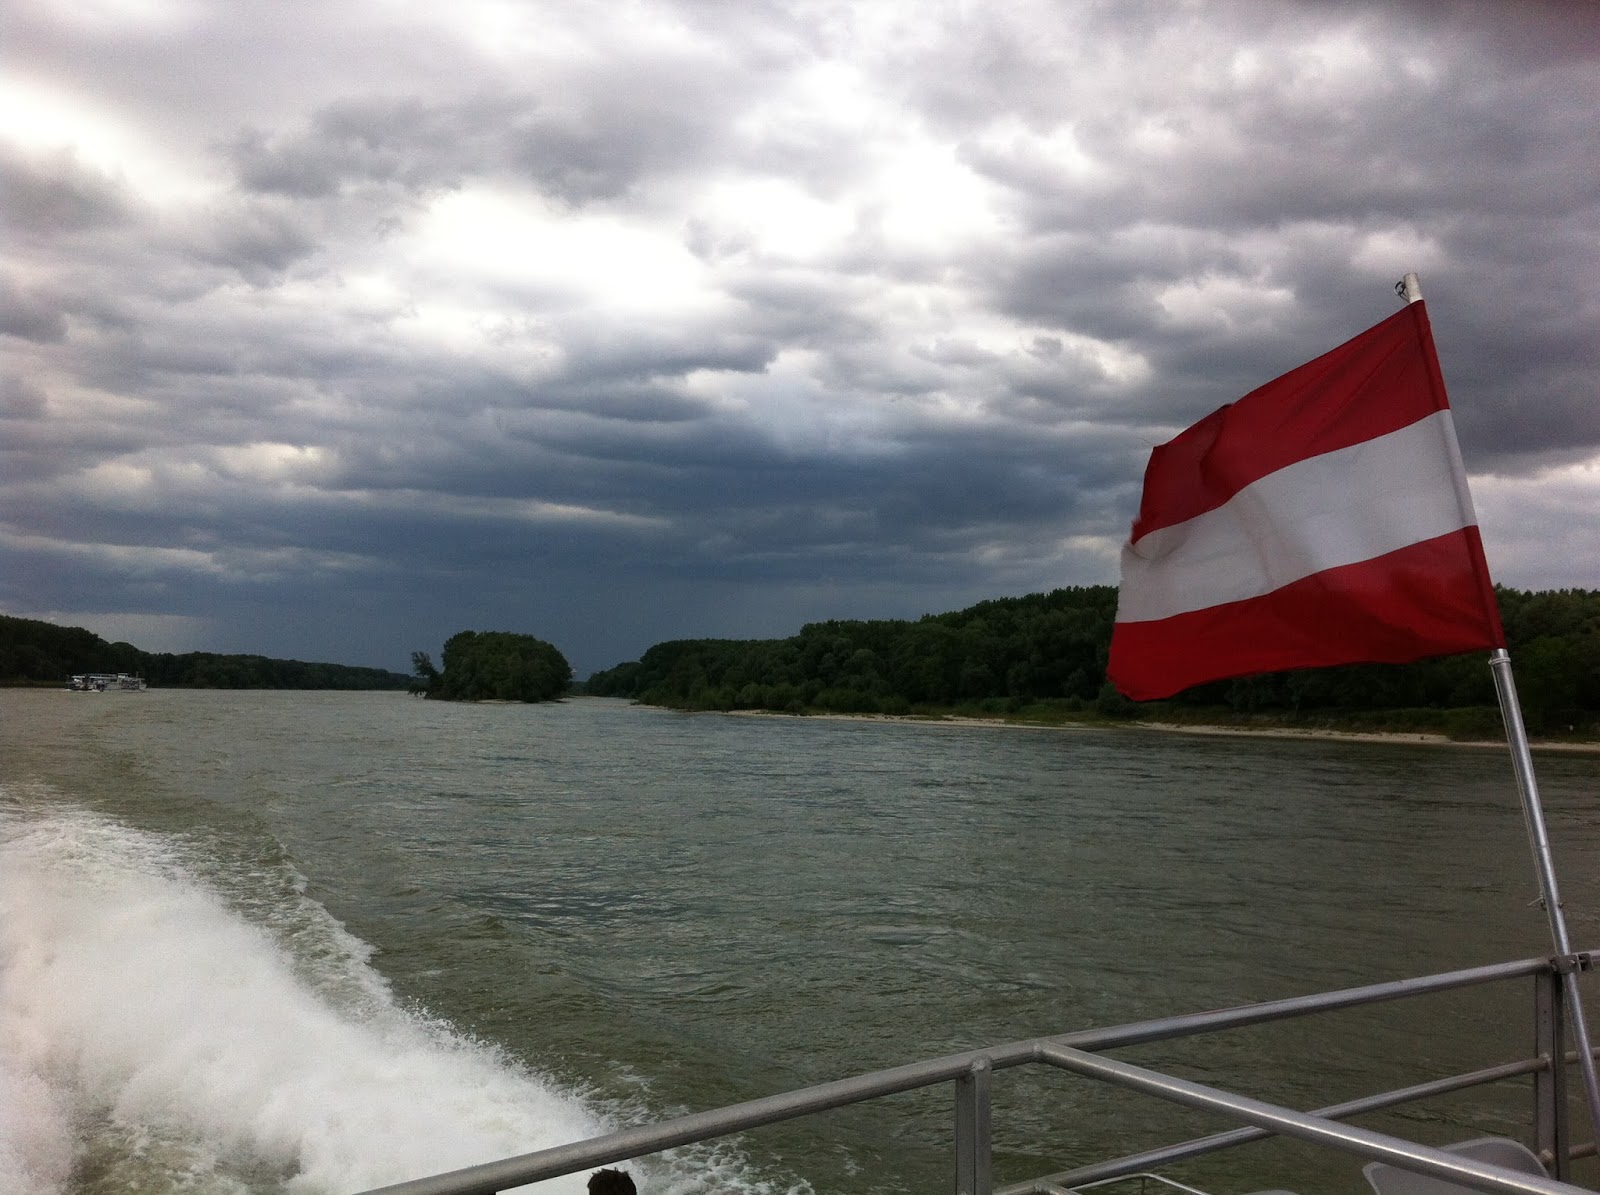 Sailing the Danube on my way to Bratislava